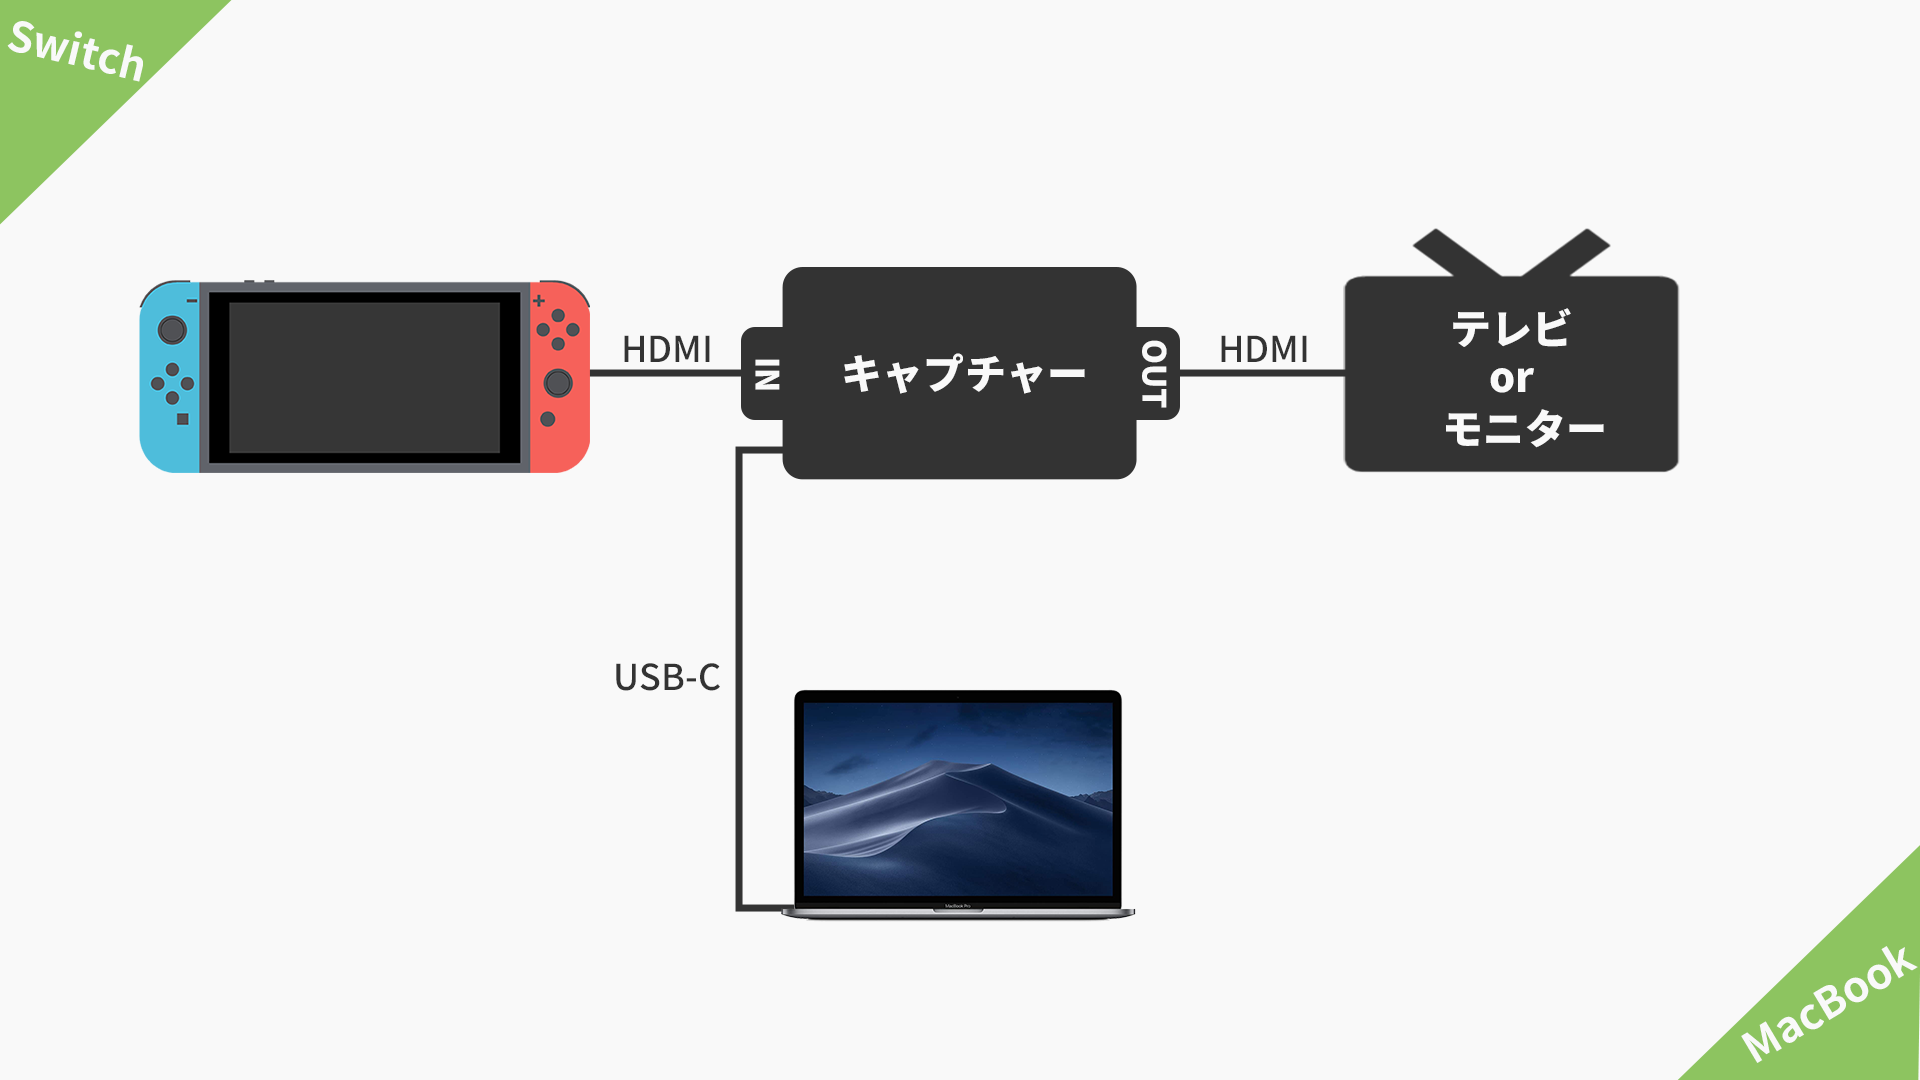 SwitchとMacBookでゲーム実況する具体的な方法の図